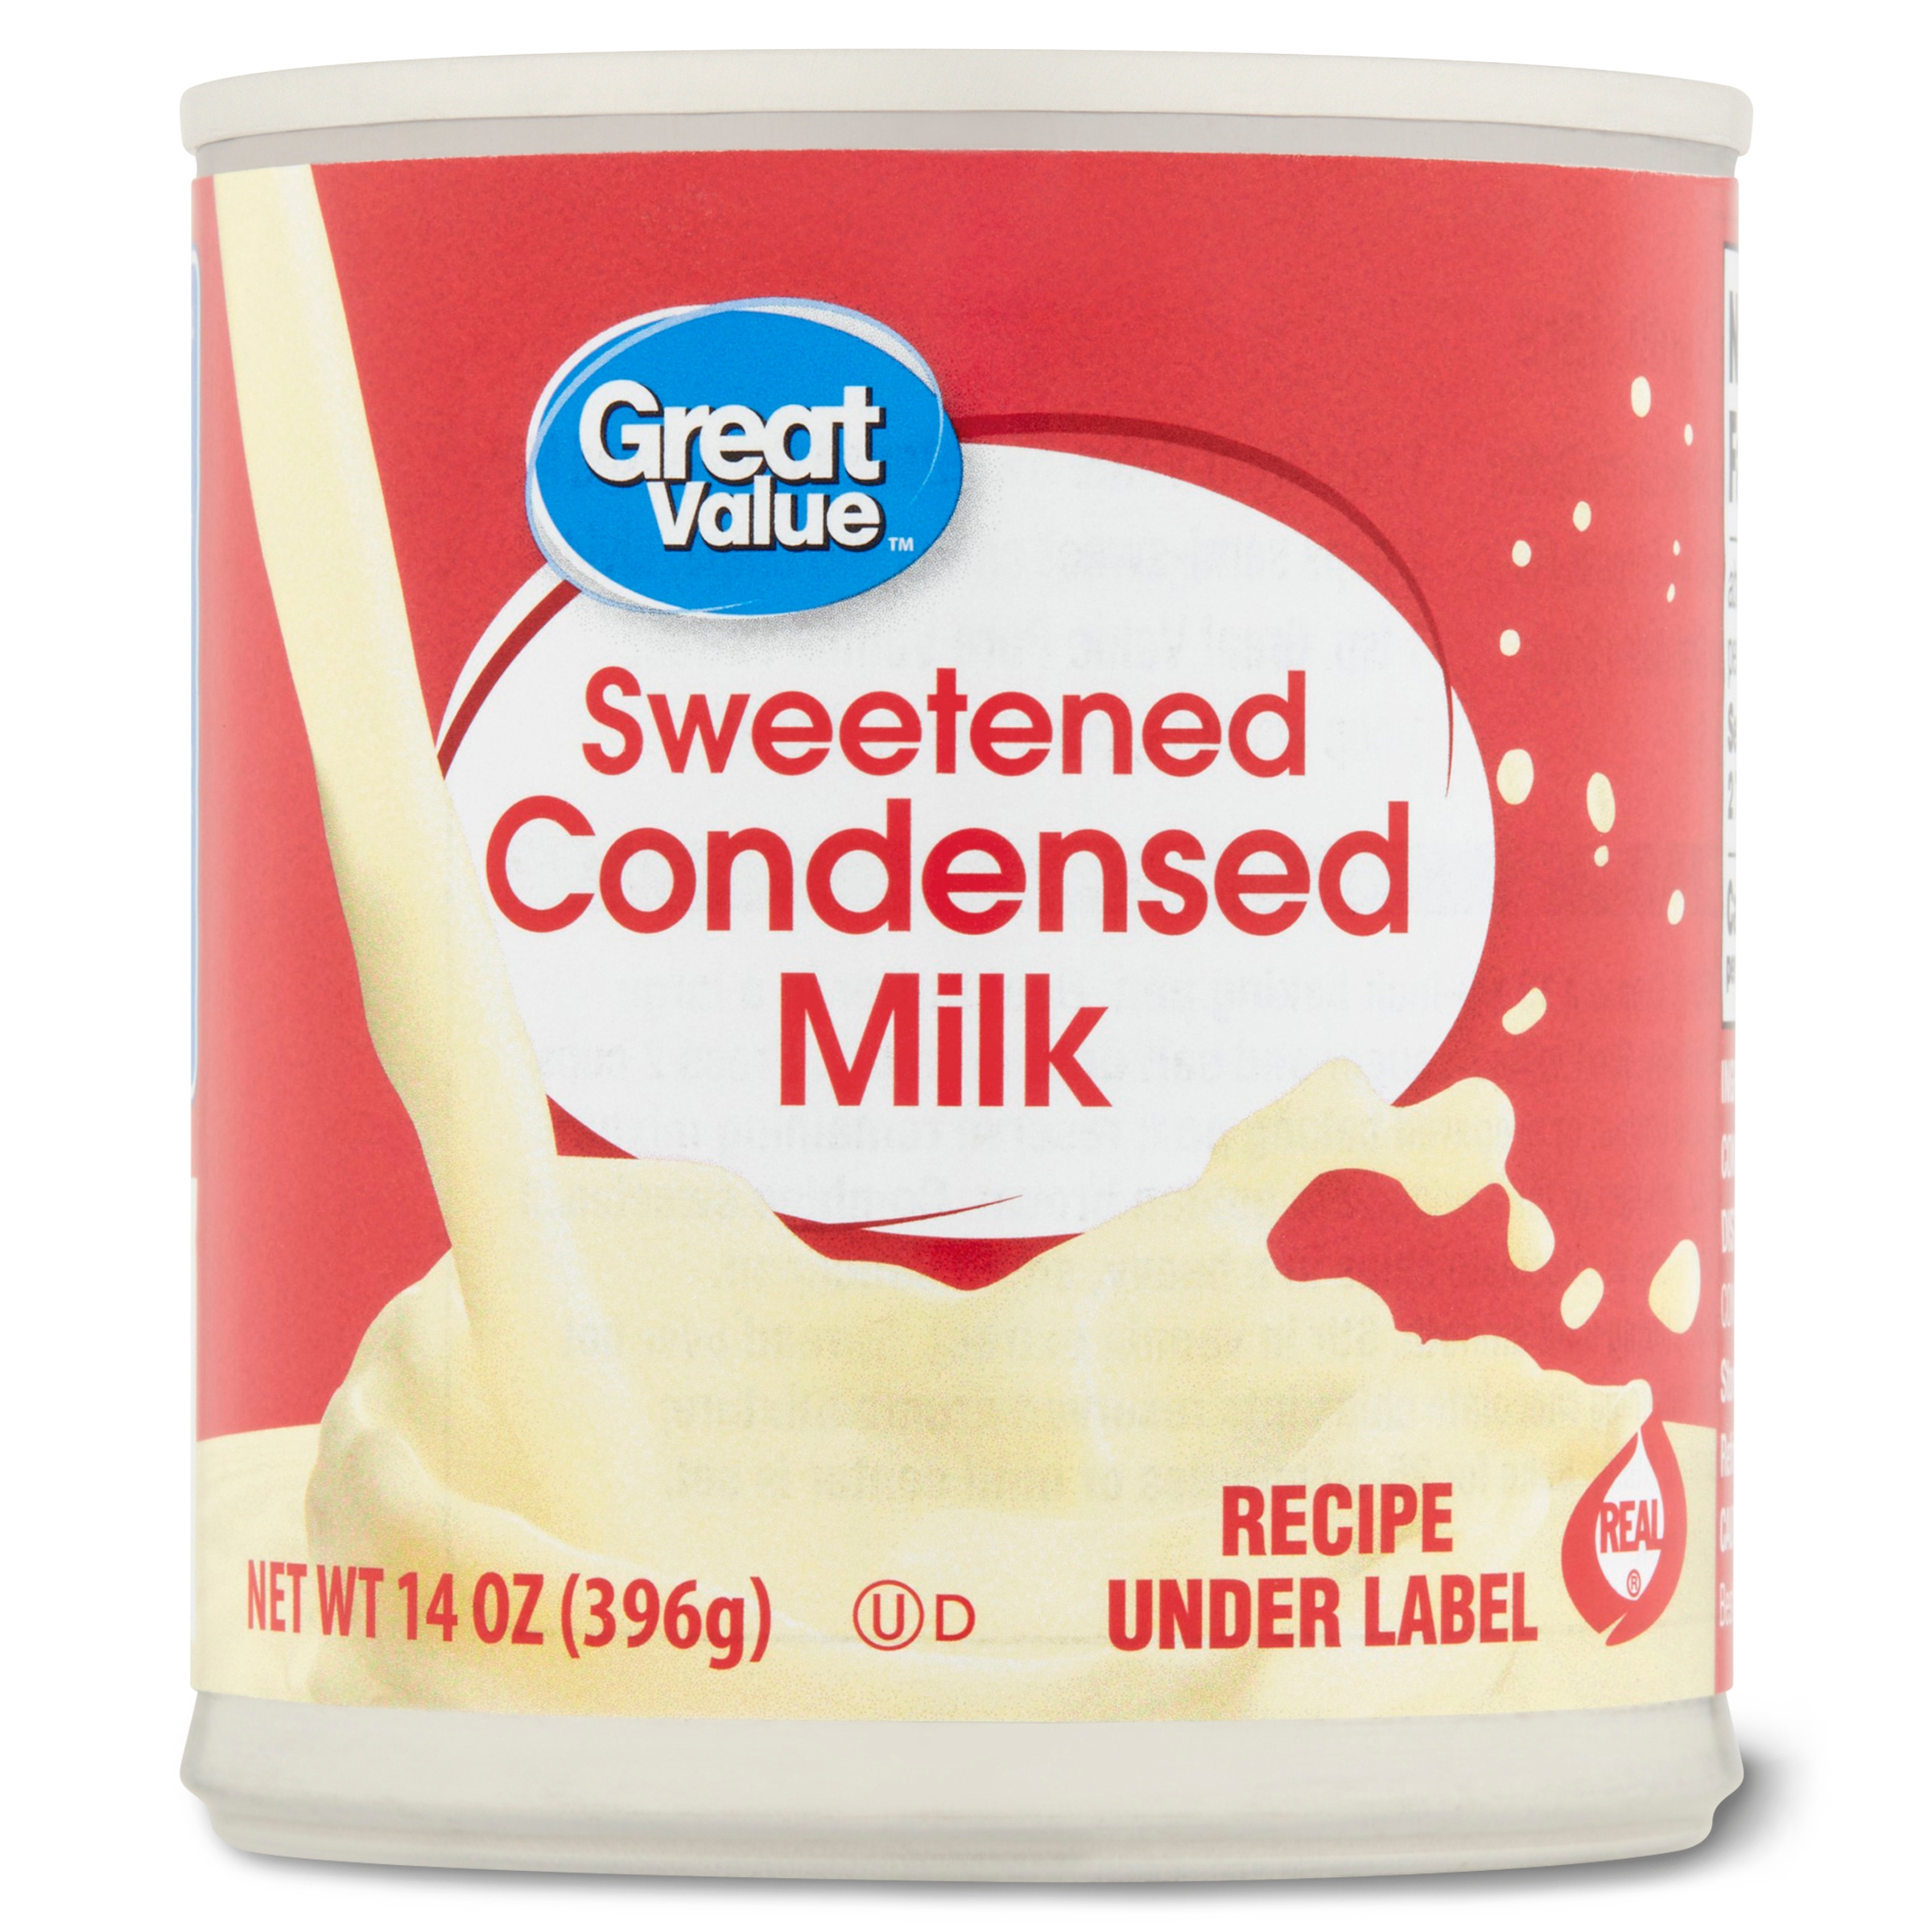 Great Value Sweetened Condensed Milk 14 oz. - image 1 of 7